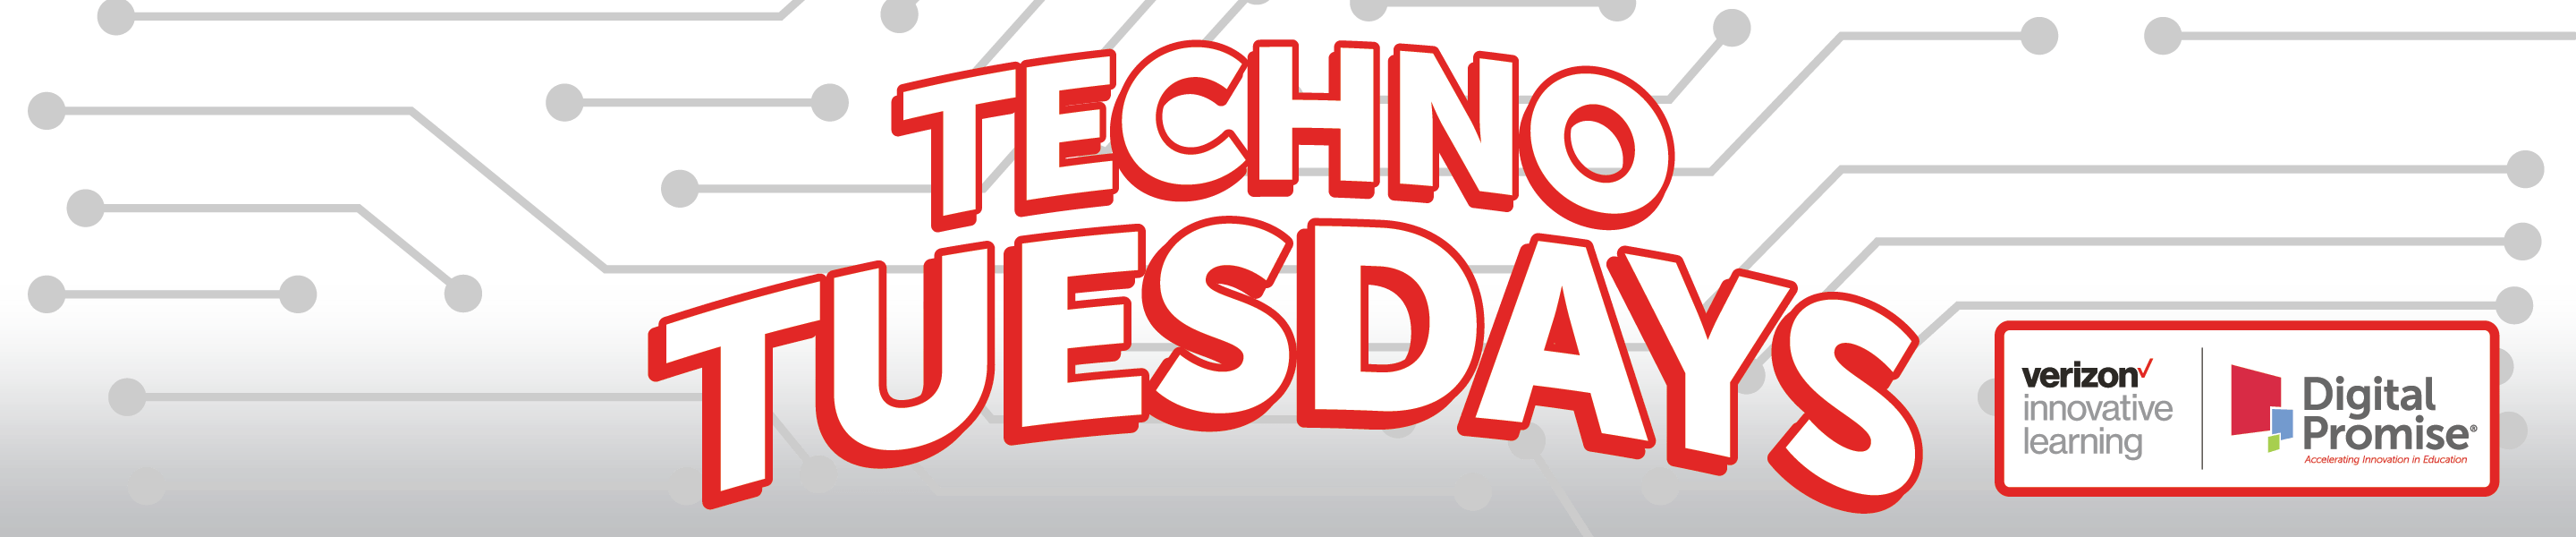 Verizon Innovative Learning schools Techno Tuesdays Webinars